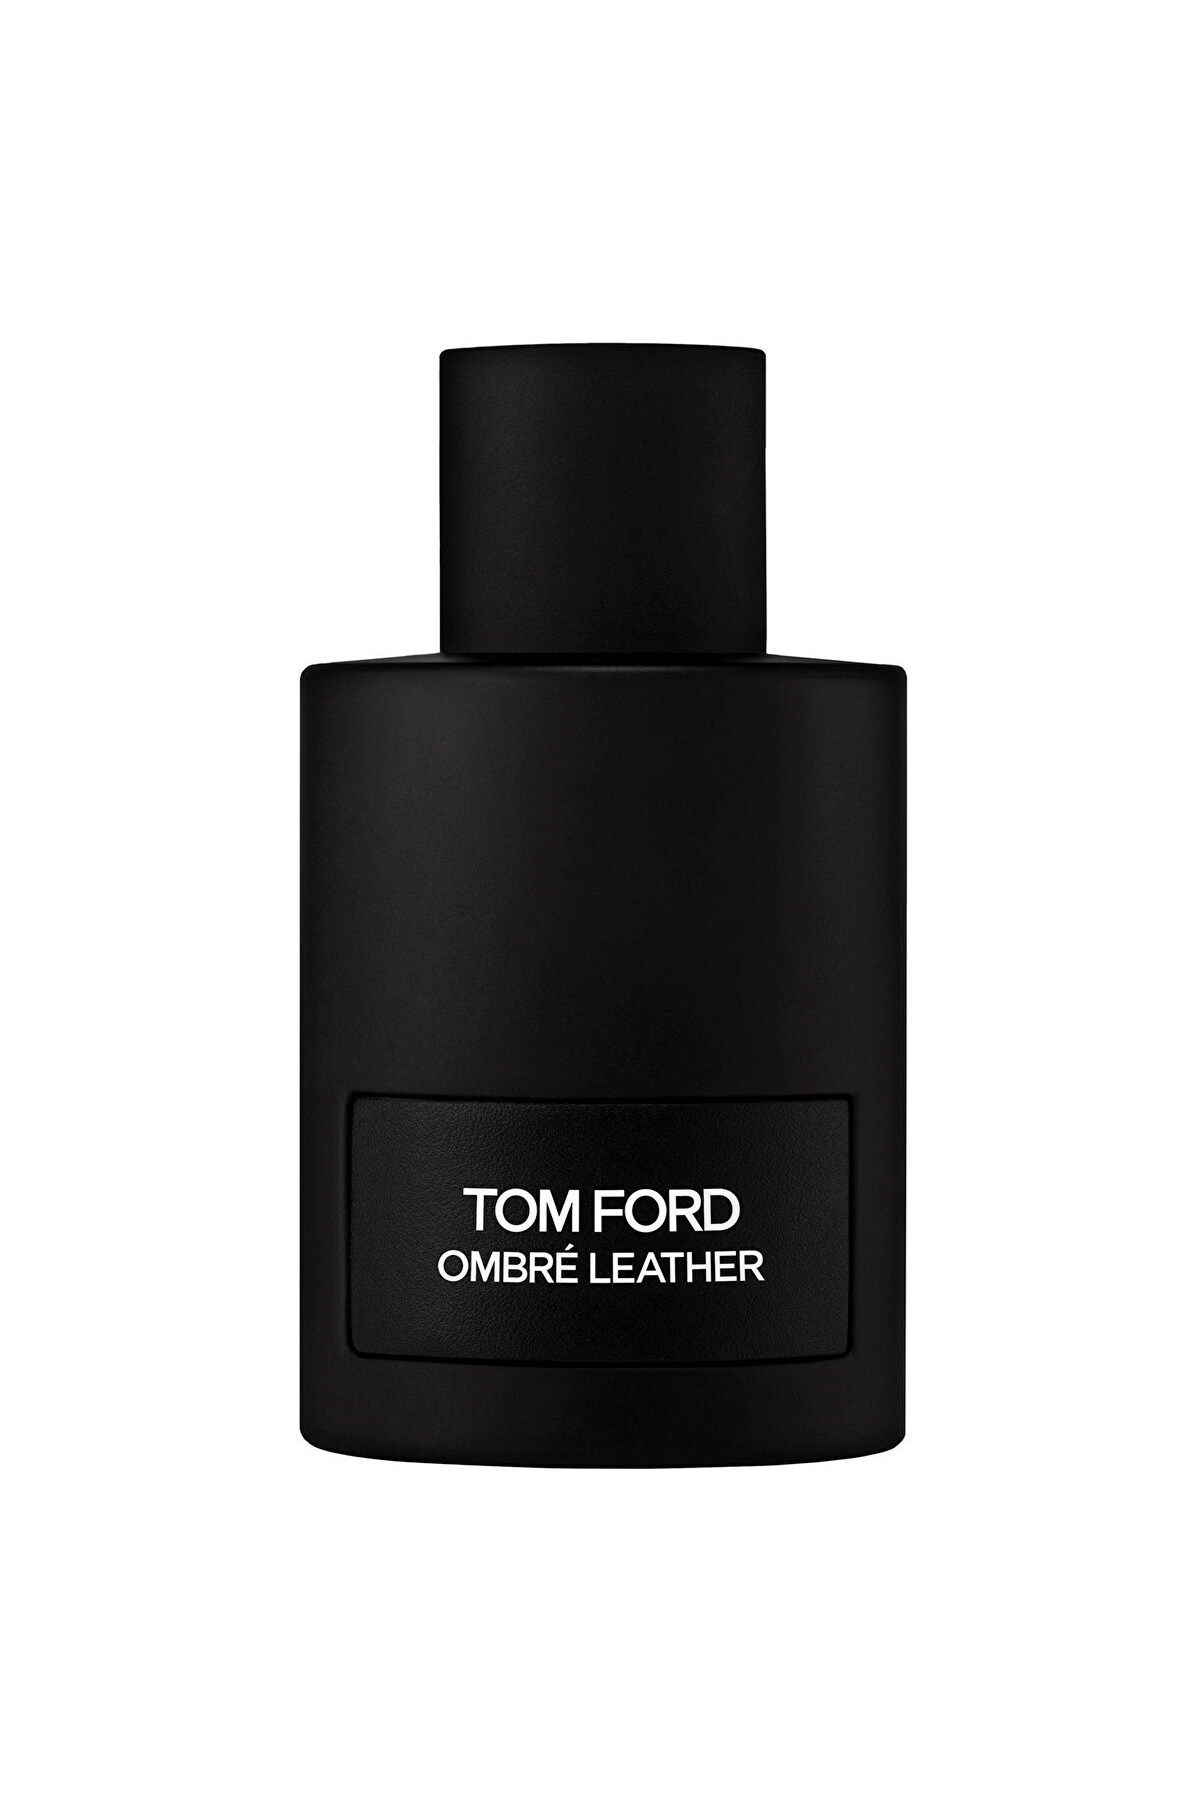 Tom Ford Ombre Leather Eau De Parfum – Çiçeksi Odunsu Unisex Edp Parfüm 150 ml